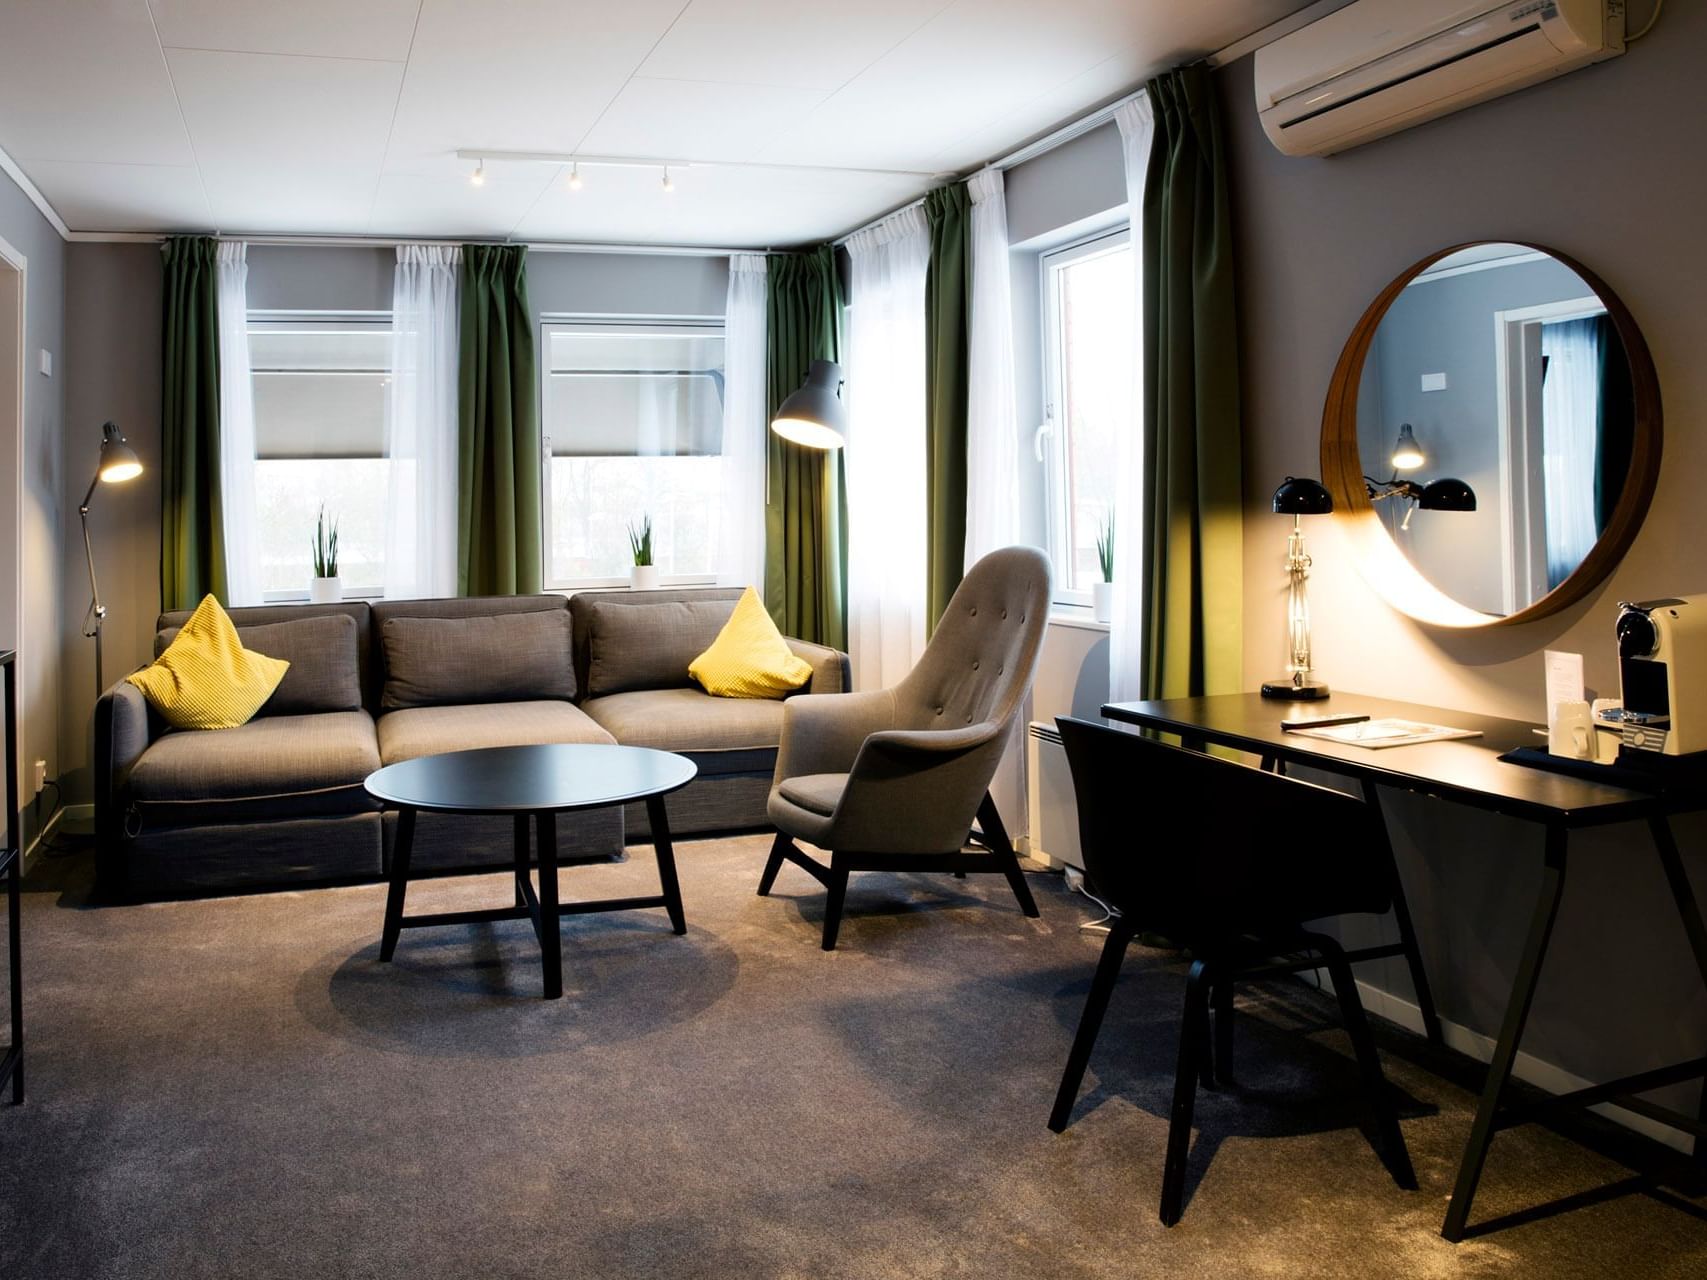 Executive King Room at Welcome Hotel in Järfälla, Sweden